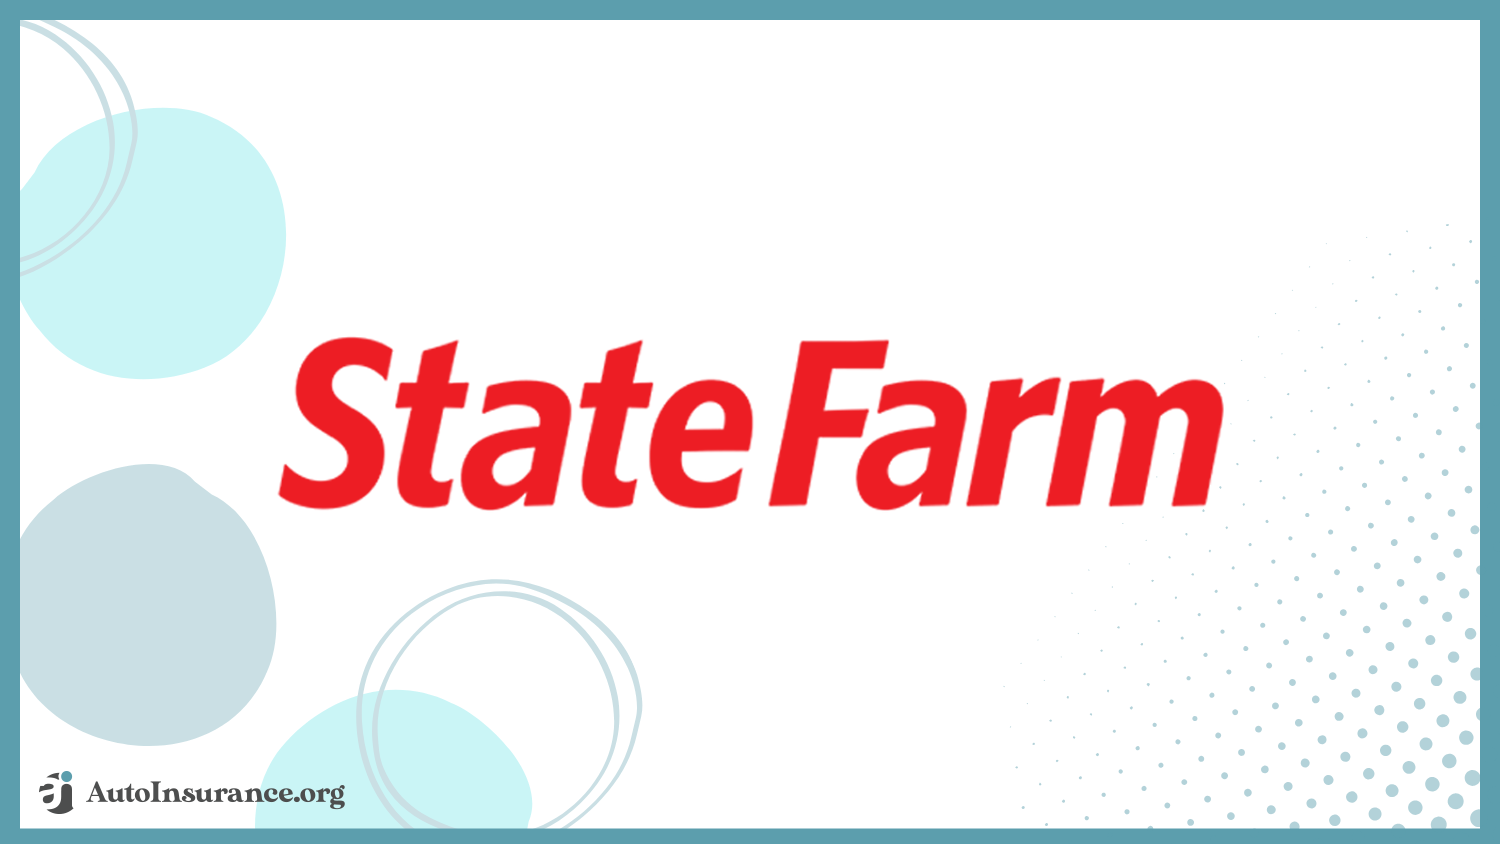 State Farm: Best Auto Insurance for Regular Maintenance